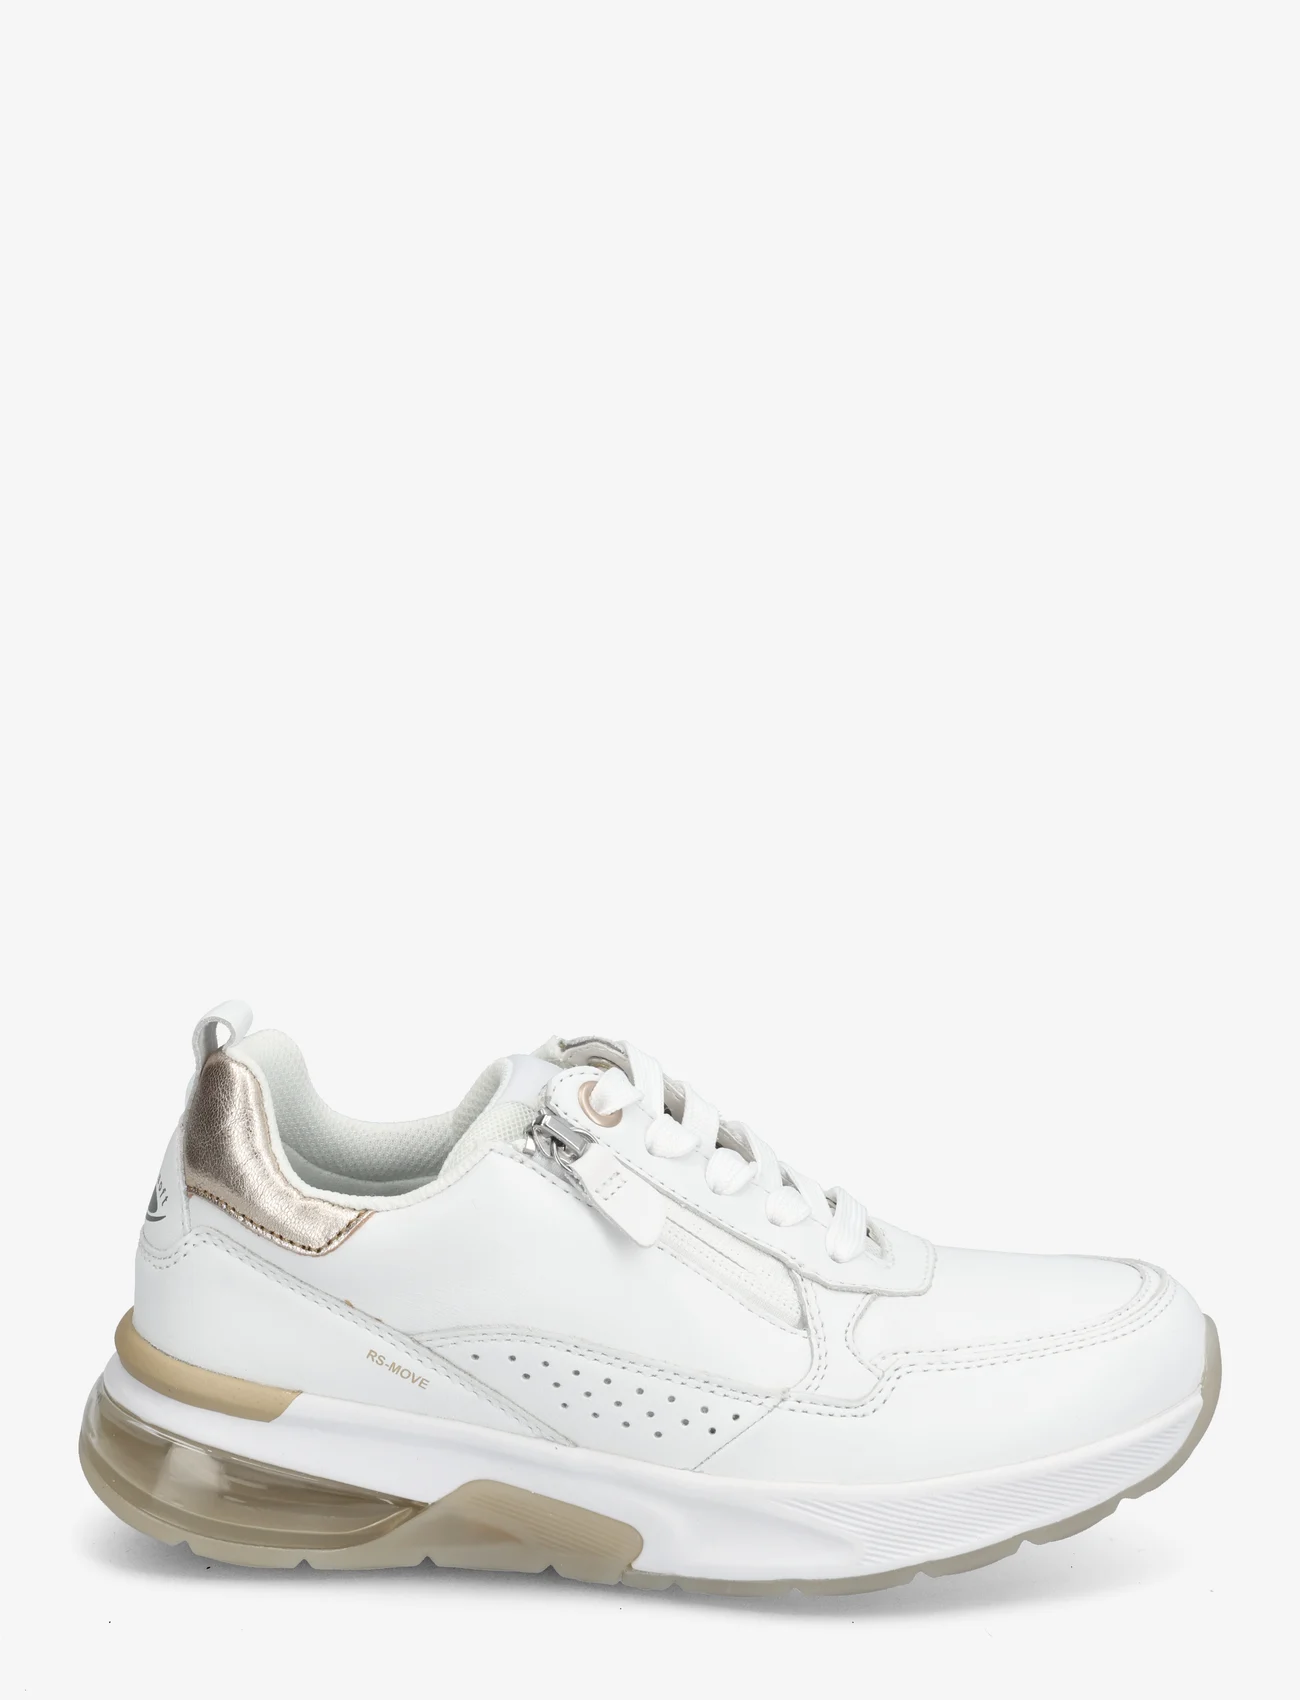 Gabor - rollingsoft sneaker - low top sneakers - white - 1